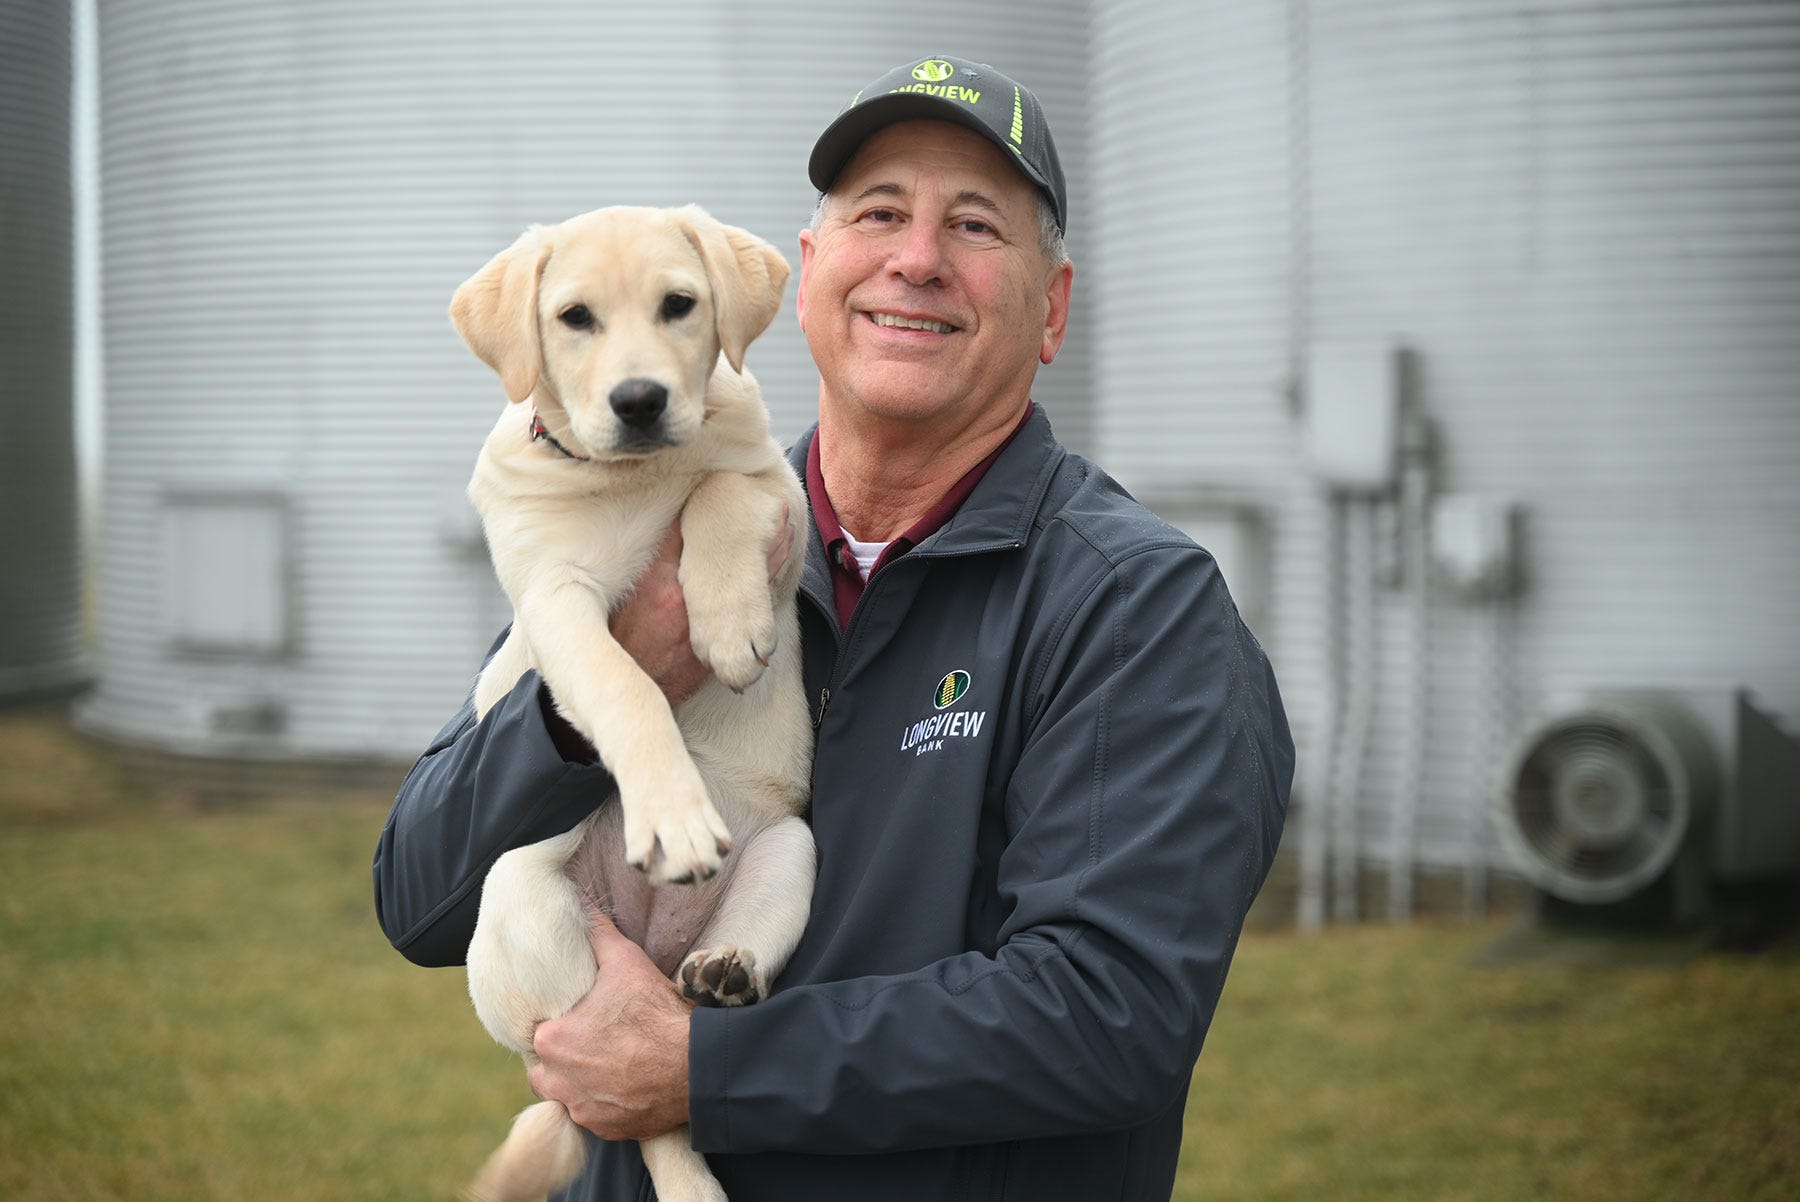 Chris Hausman holding a yellow labrador retriever puppy